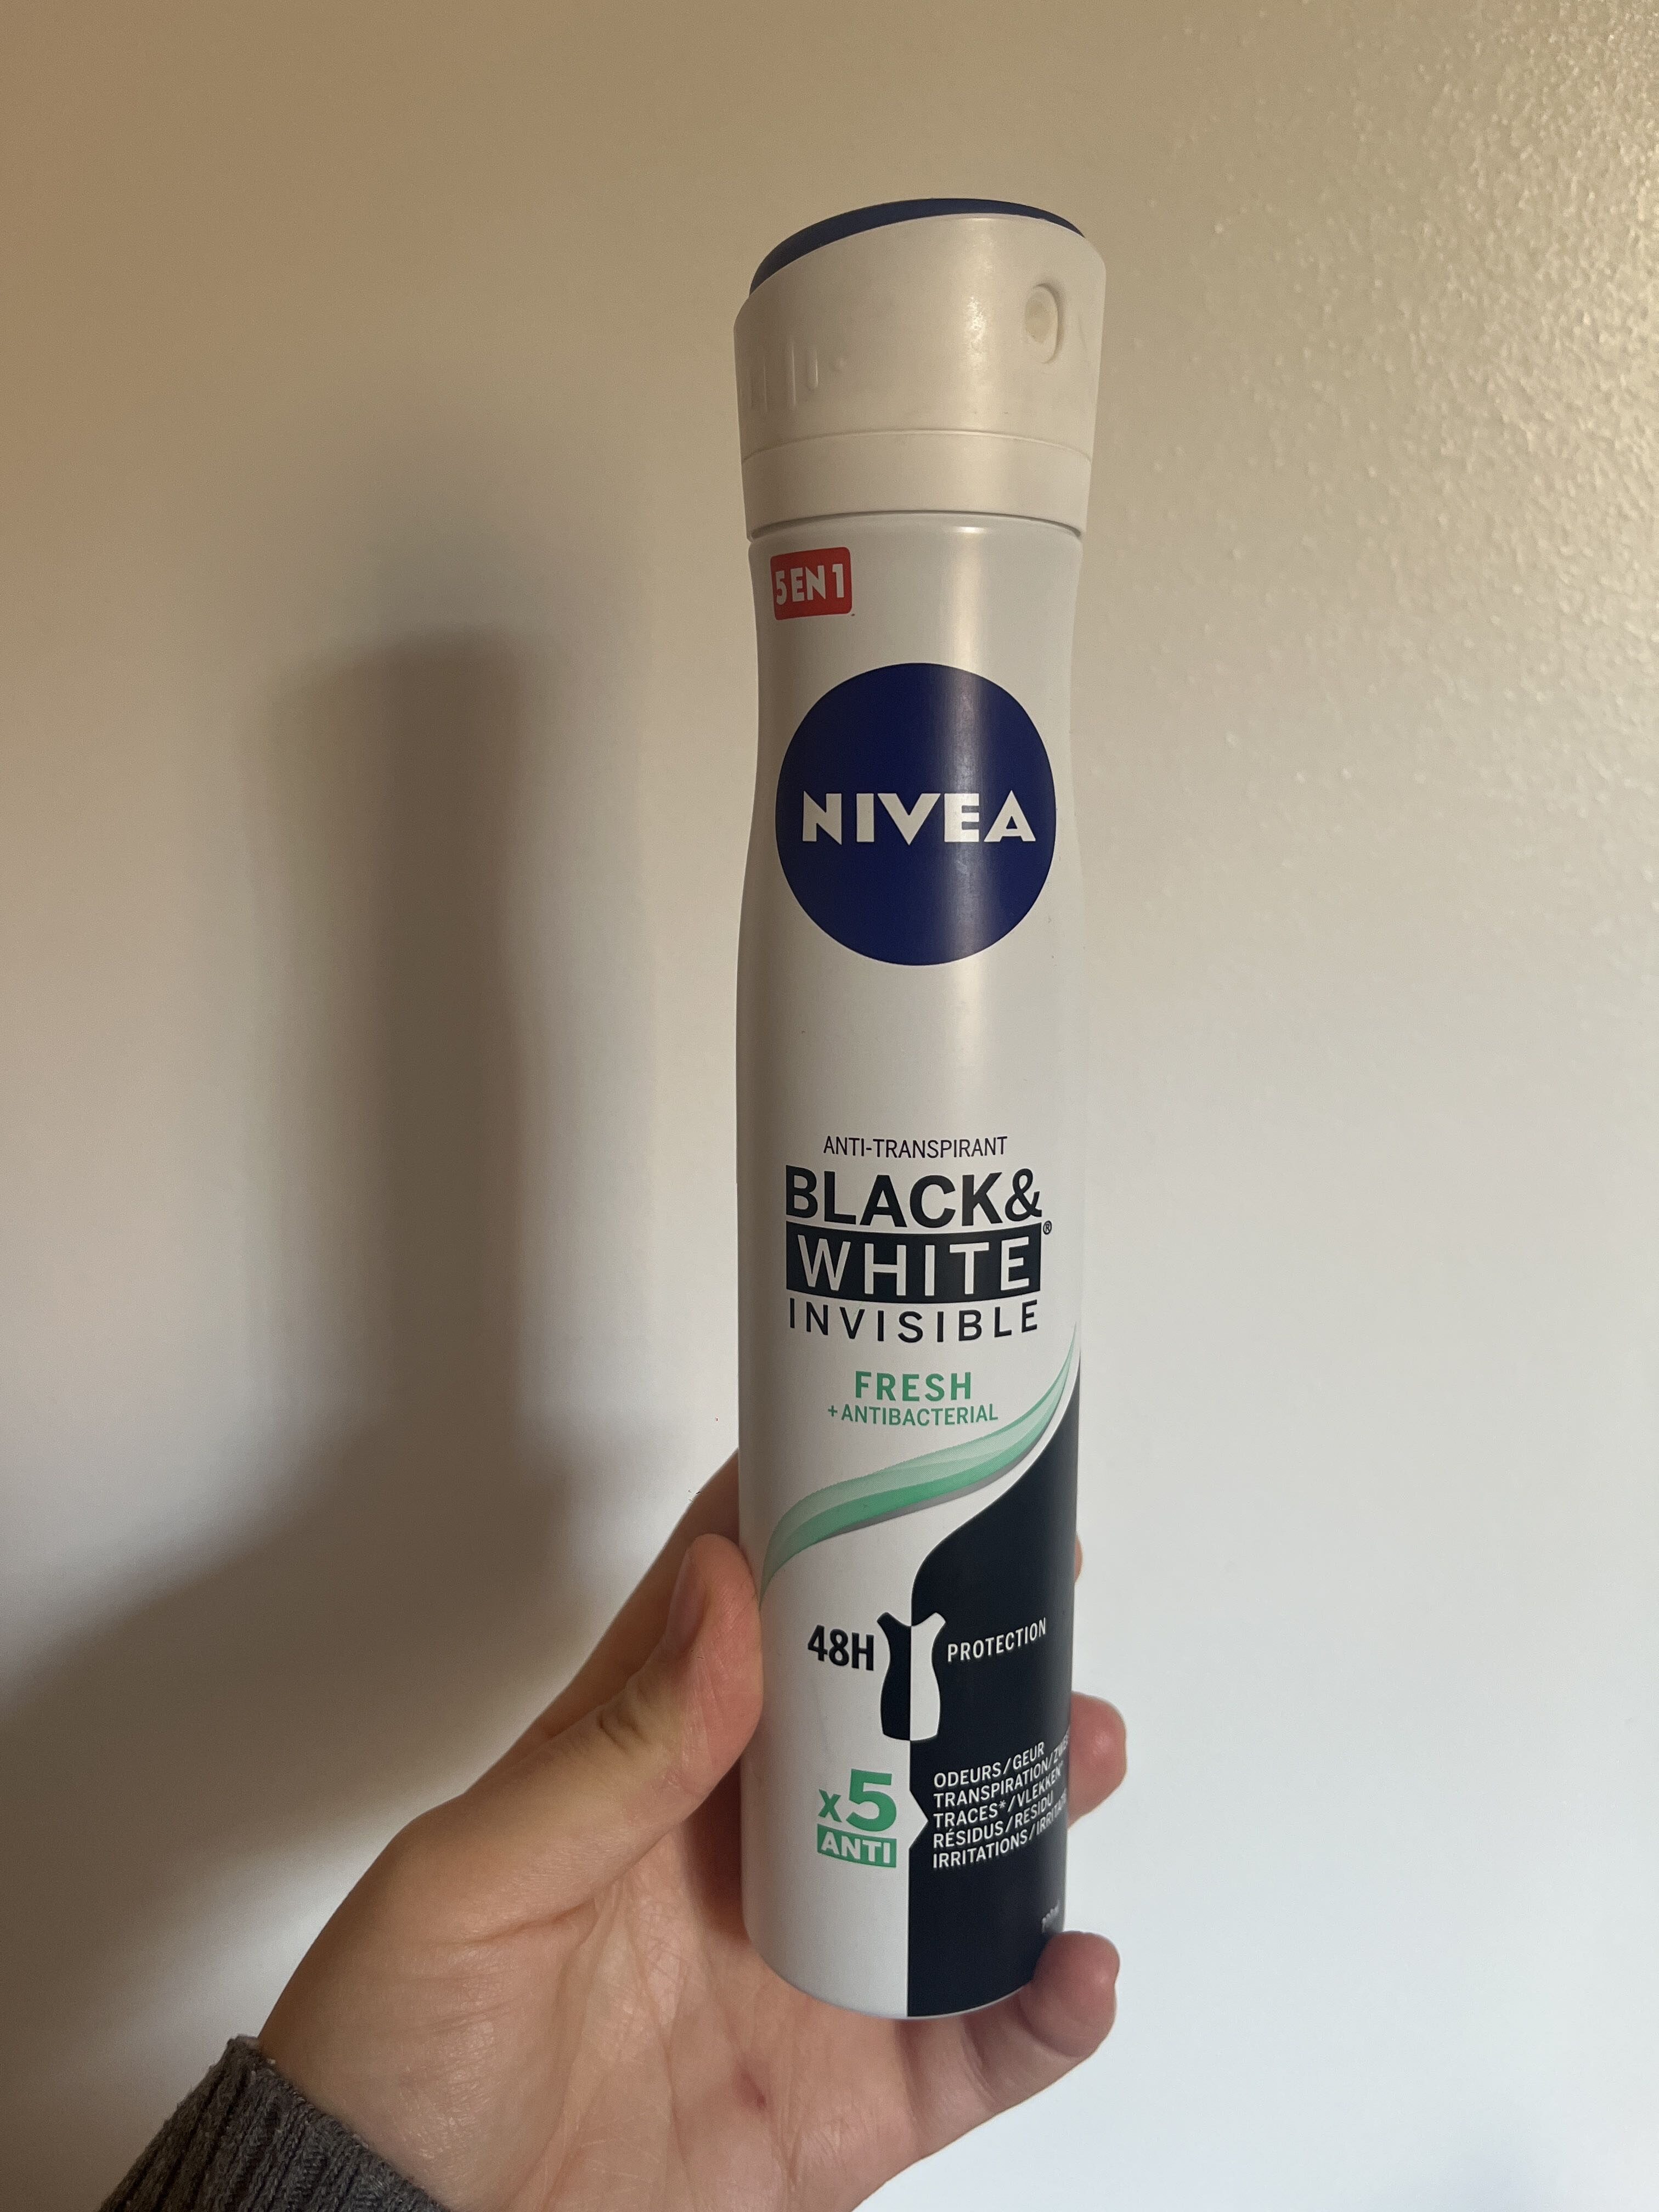 Déodorant Nivea black & white invisible - Produit - fr